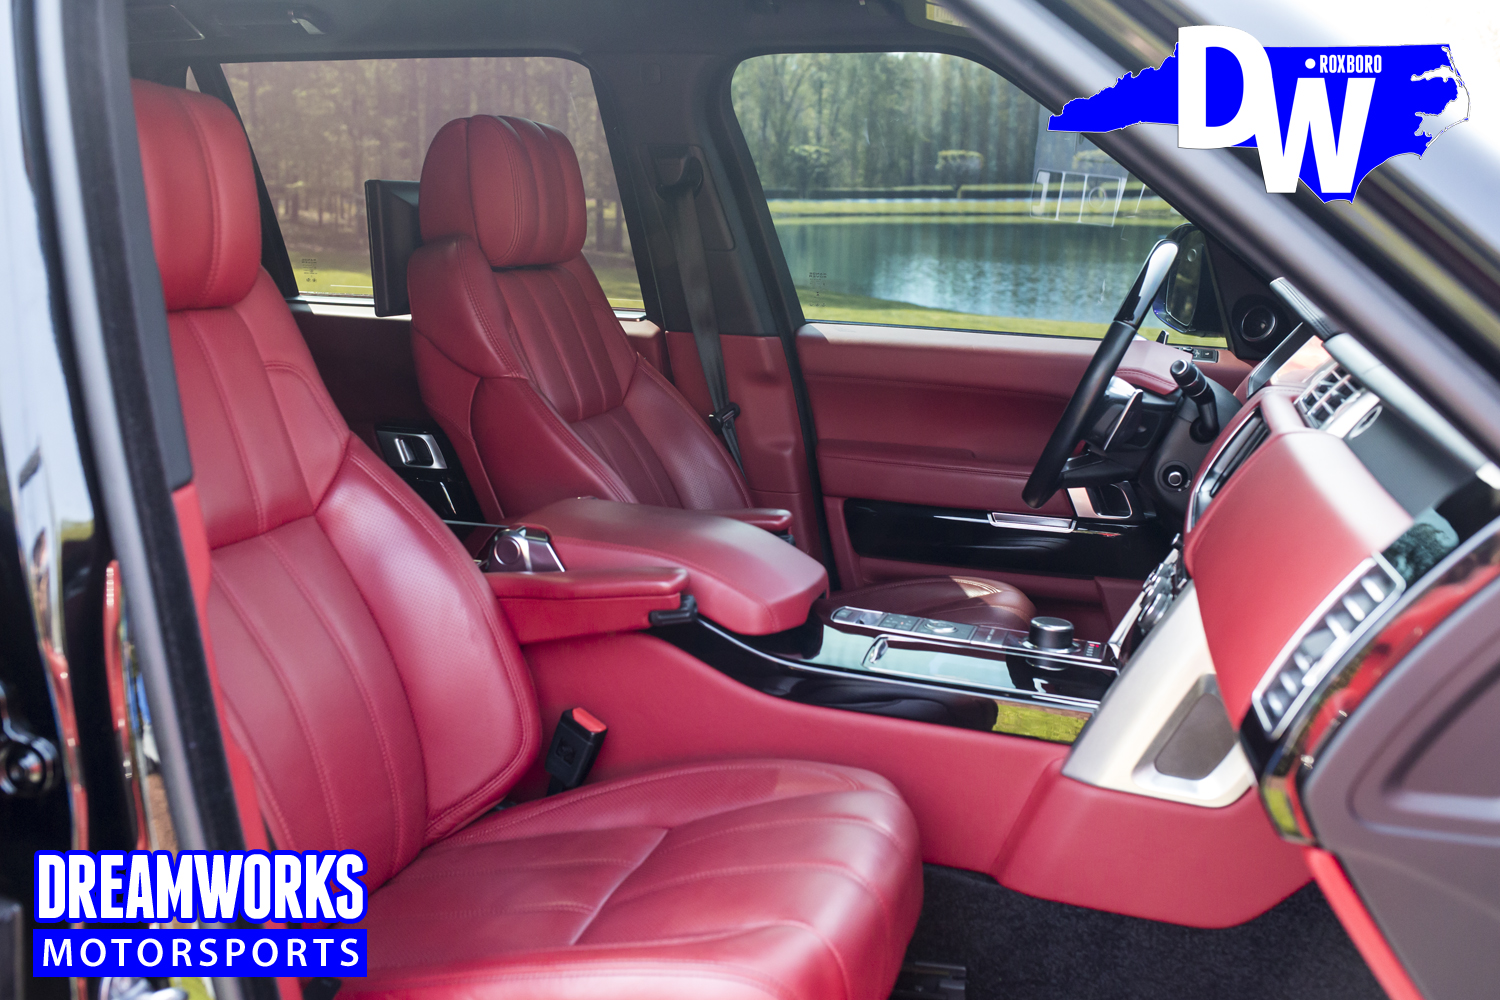 Satin-Black-Range-Rover-Dreamworks-Motorsports-interior-5.jpg